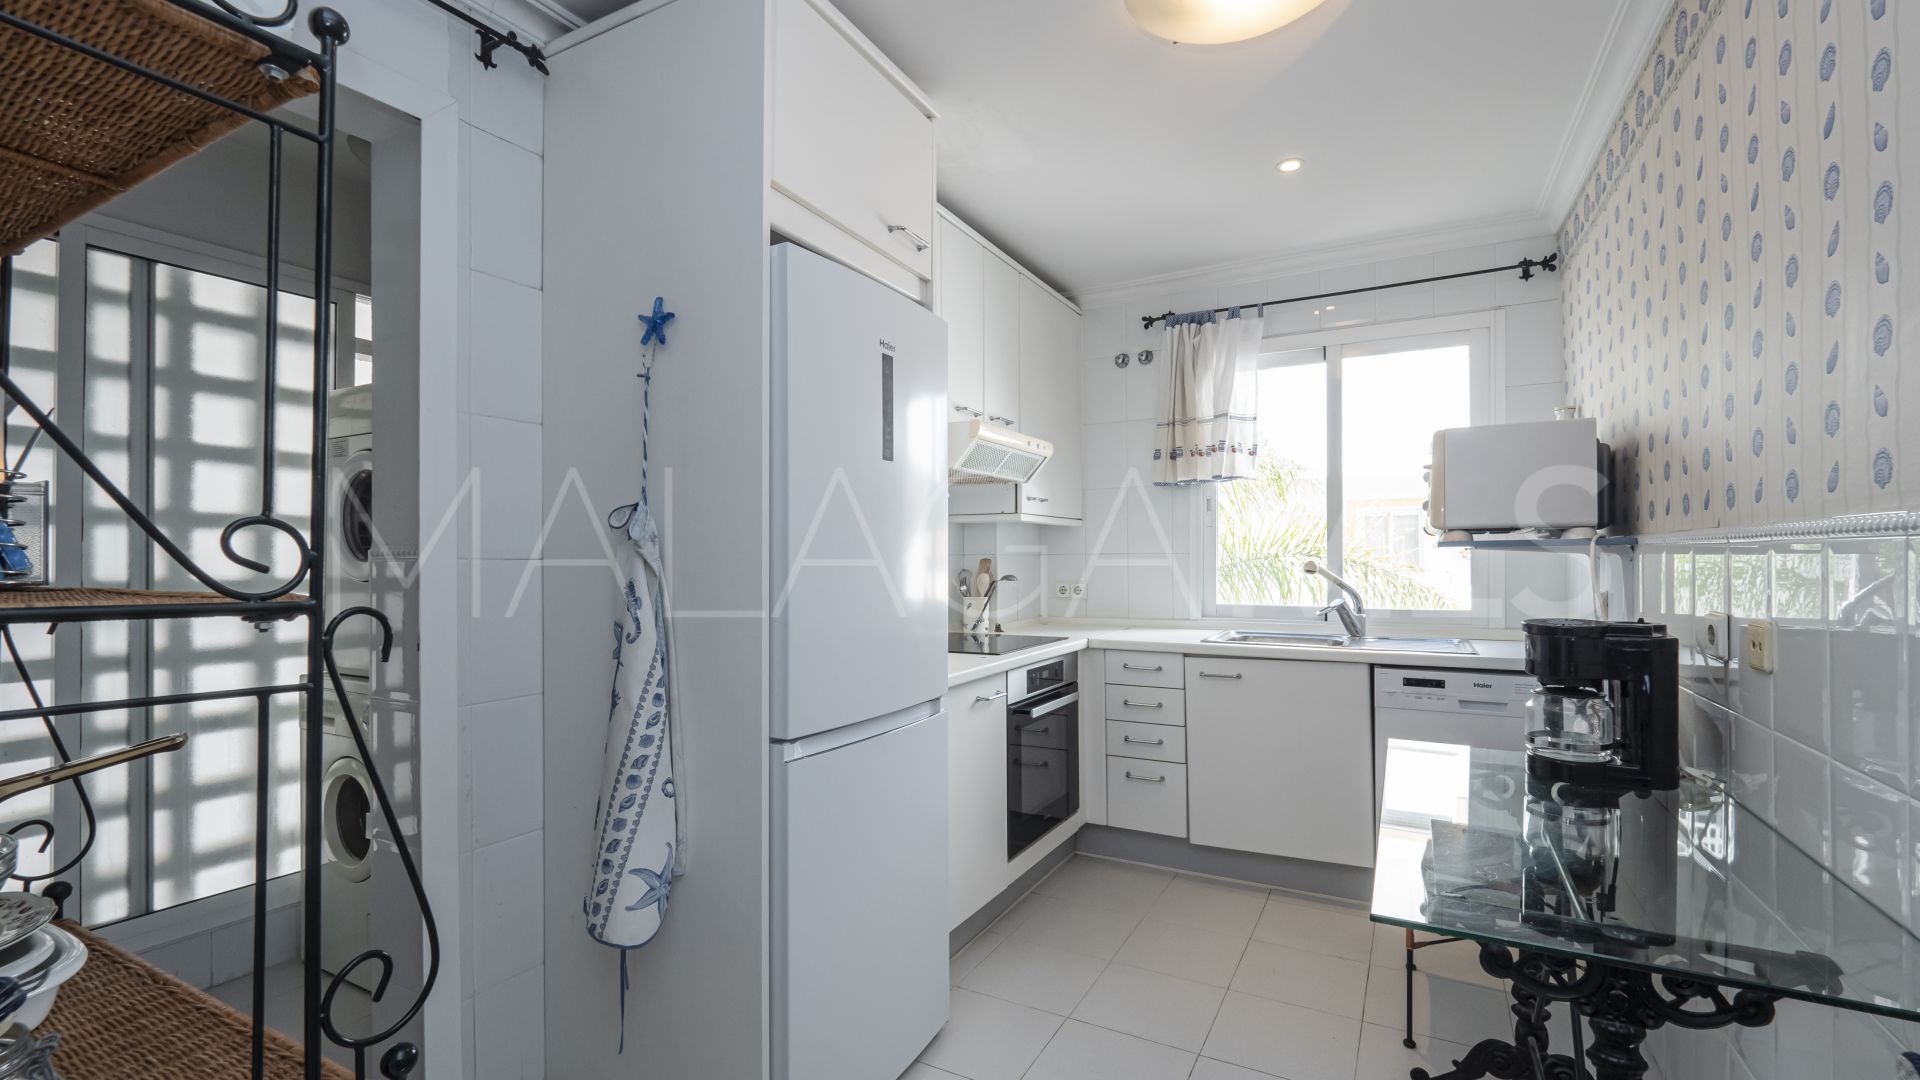 2 bedrooms Marbella - Puerto Banus apartment for sale